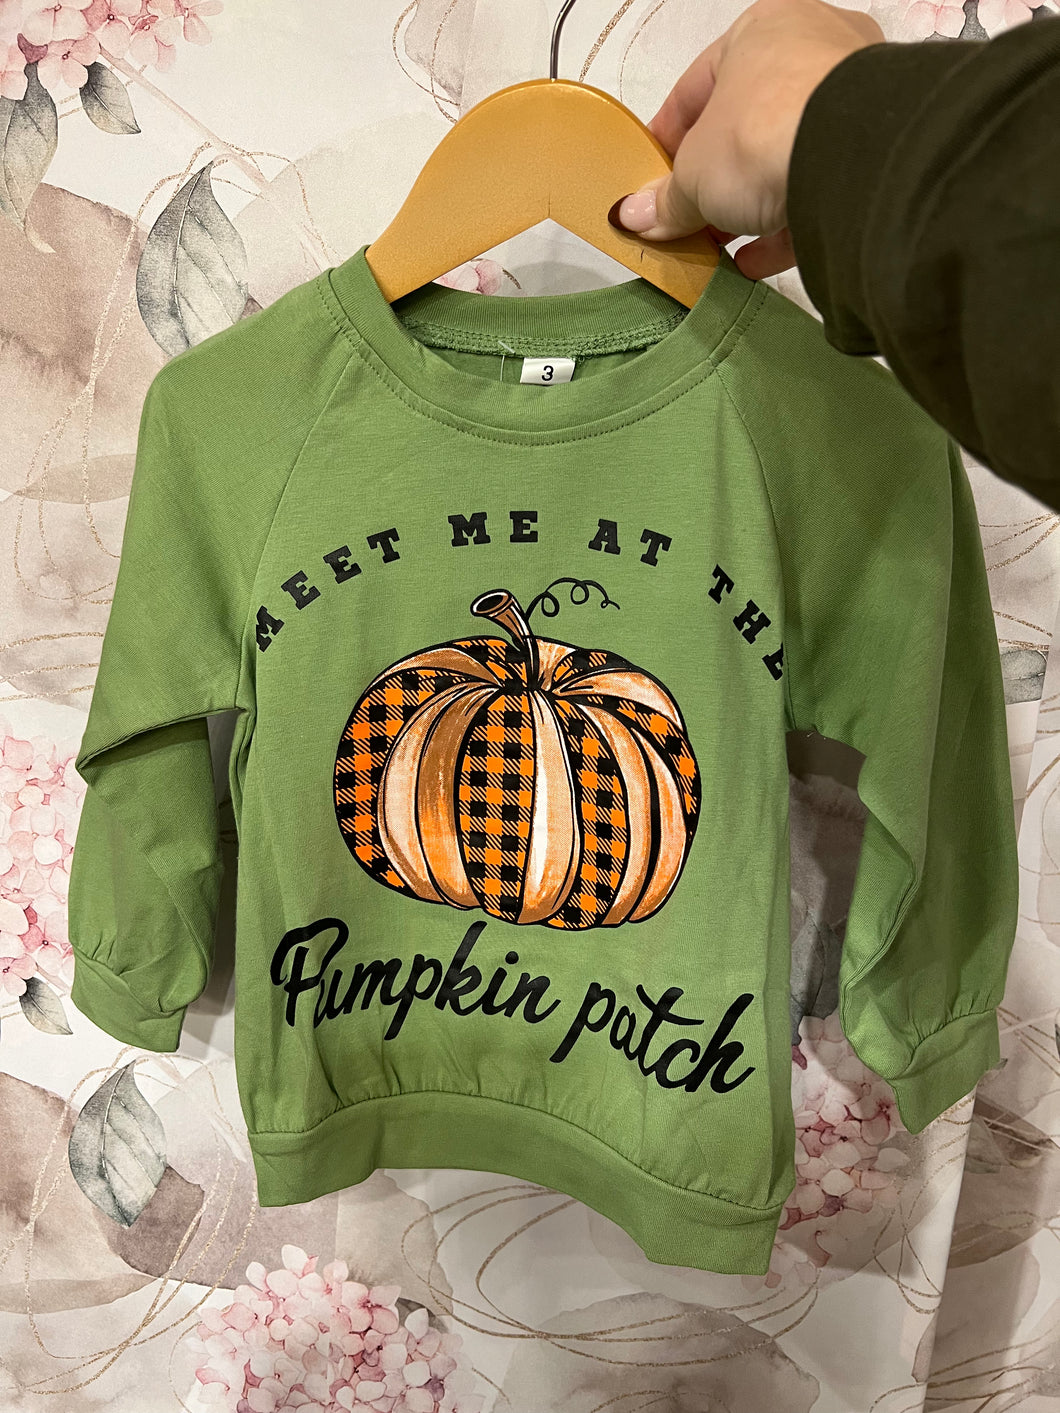 Meet me at the Pumpkin Patch Top